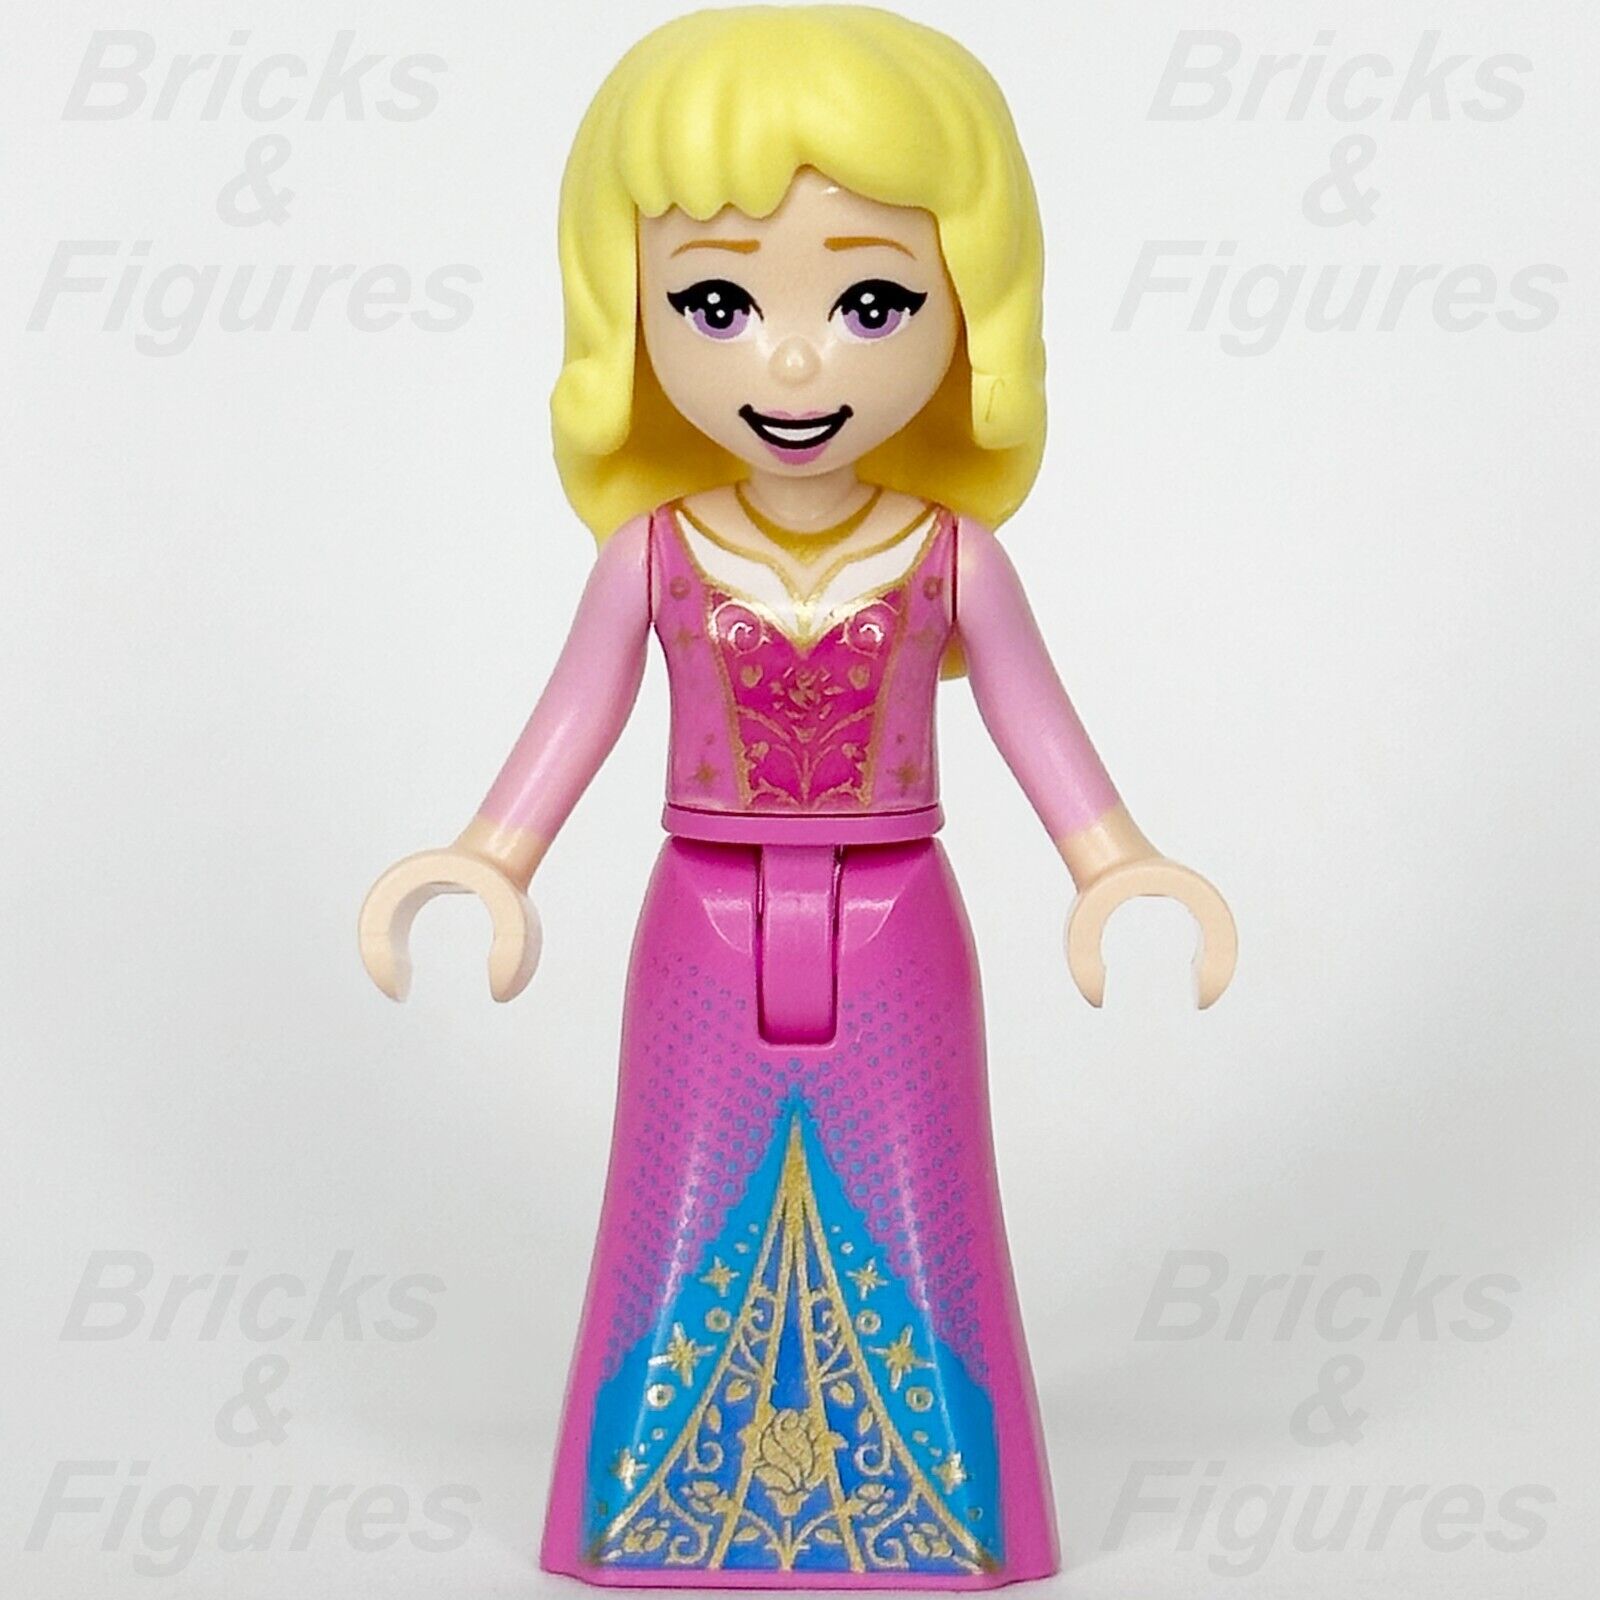 LEGO Disney Princess Aurora Minifigure Sleeping Beauty 43188 dp105 Minifig 2